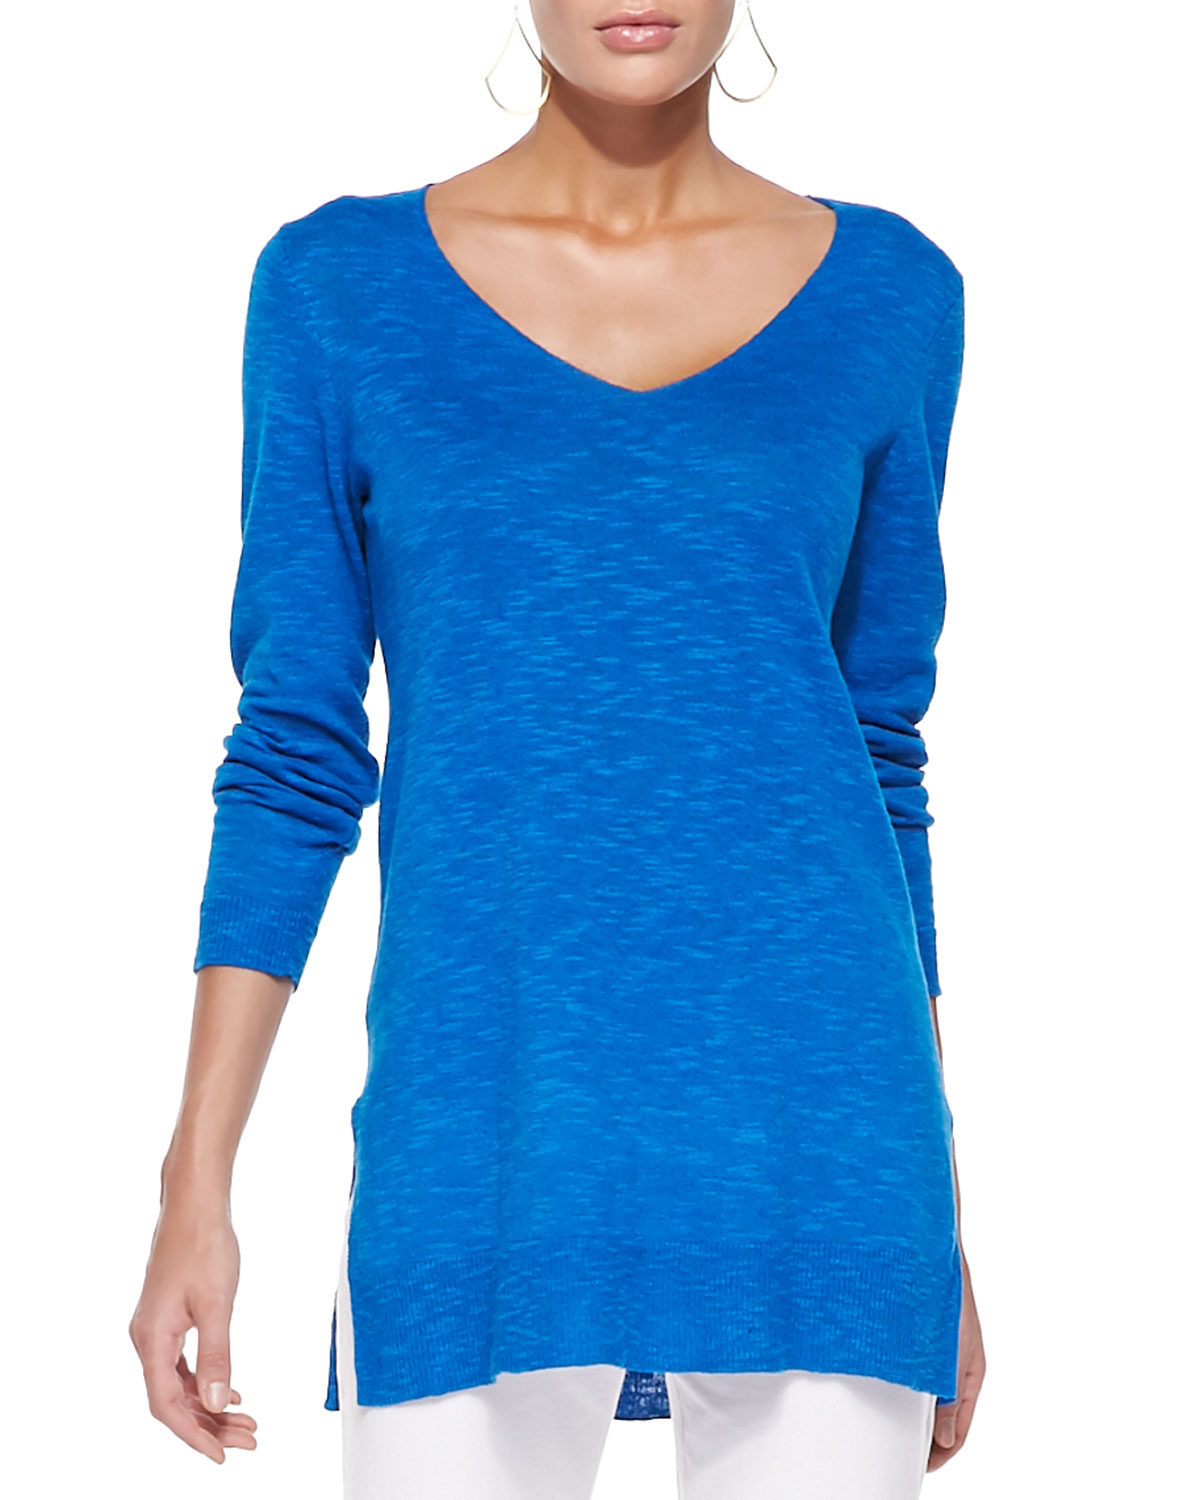 Lyst - Eileen Fisher Organic Linen/Cotton Slub V-Neck Tunic in Blue